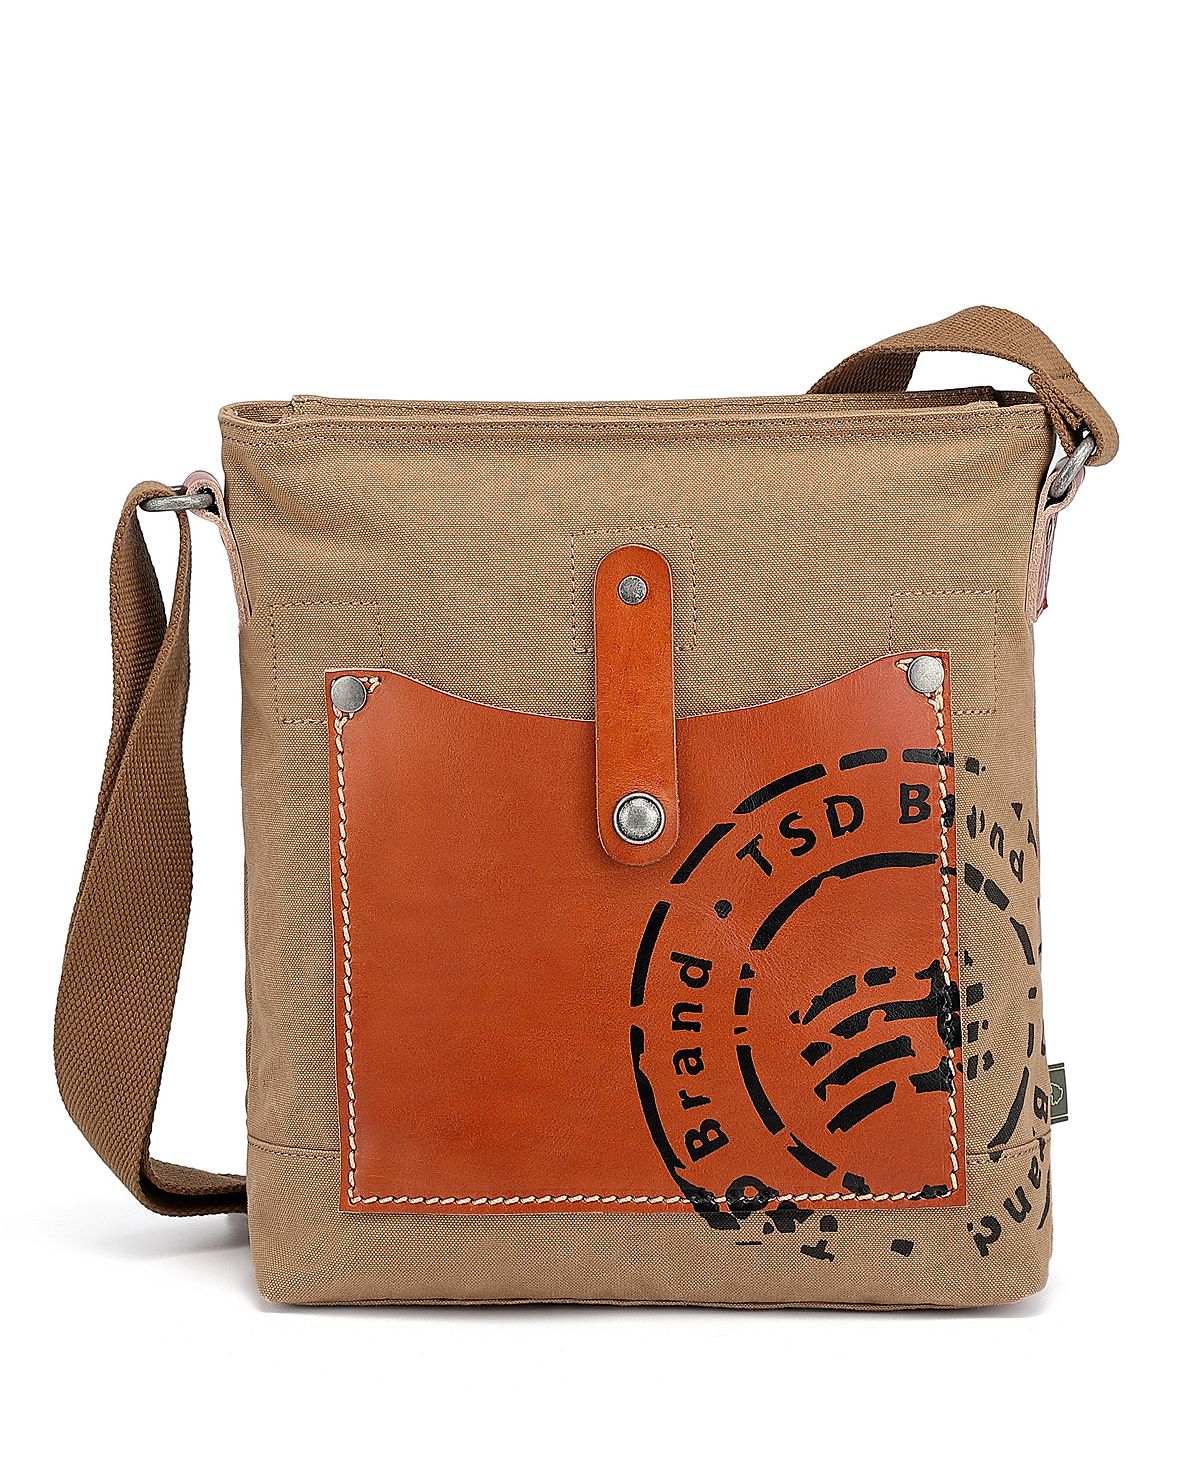 Холщовая сумка через плечо Super Horse TSD BRAND, коричневый холщовая сумка через плечо lake toya tsd brand